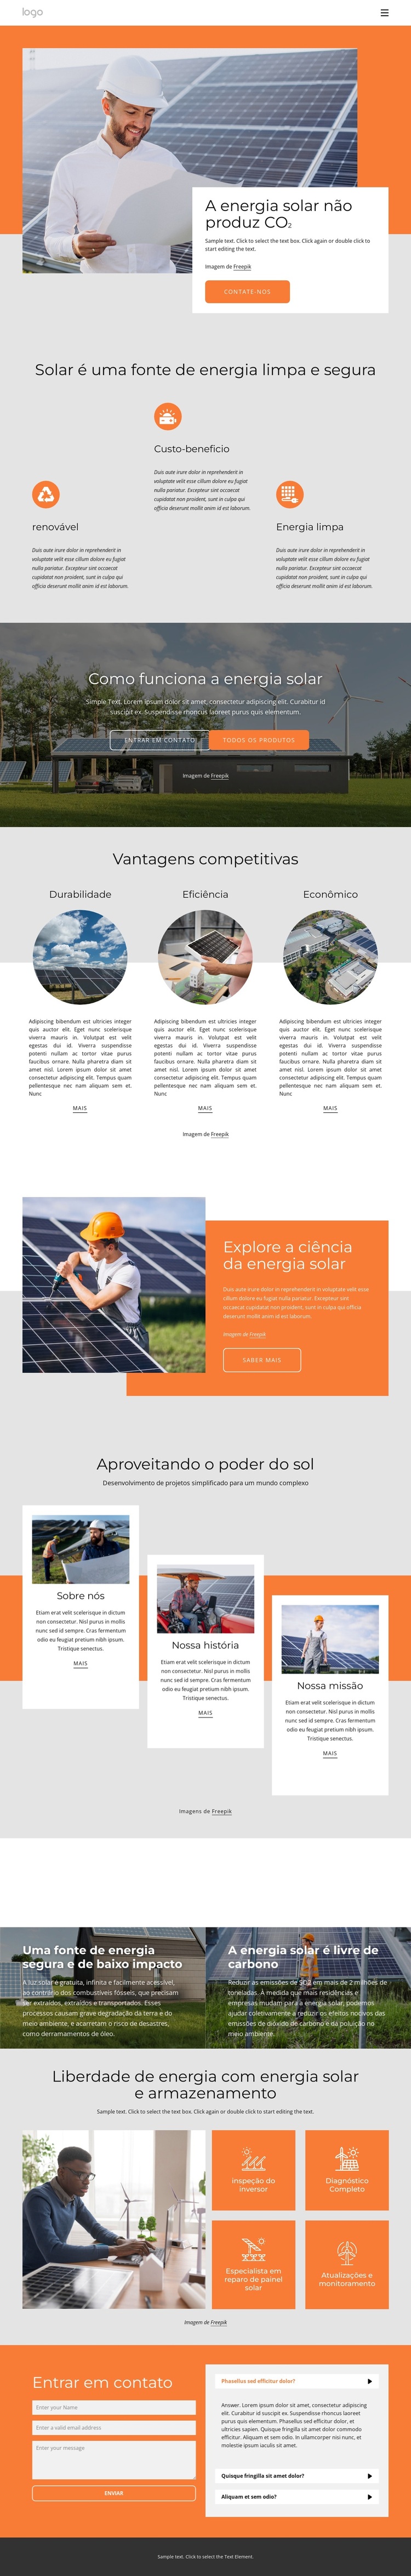 Alimente sua casa com energia solar limpa Tema WordPress